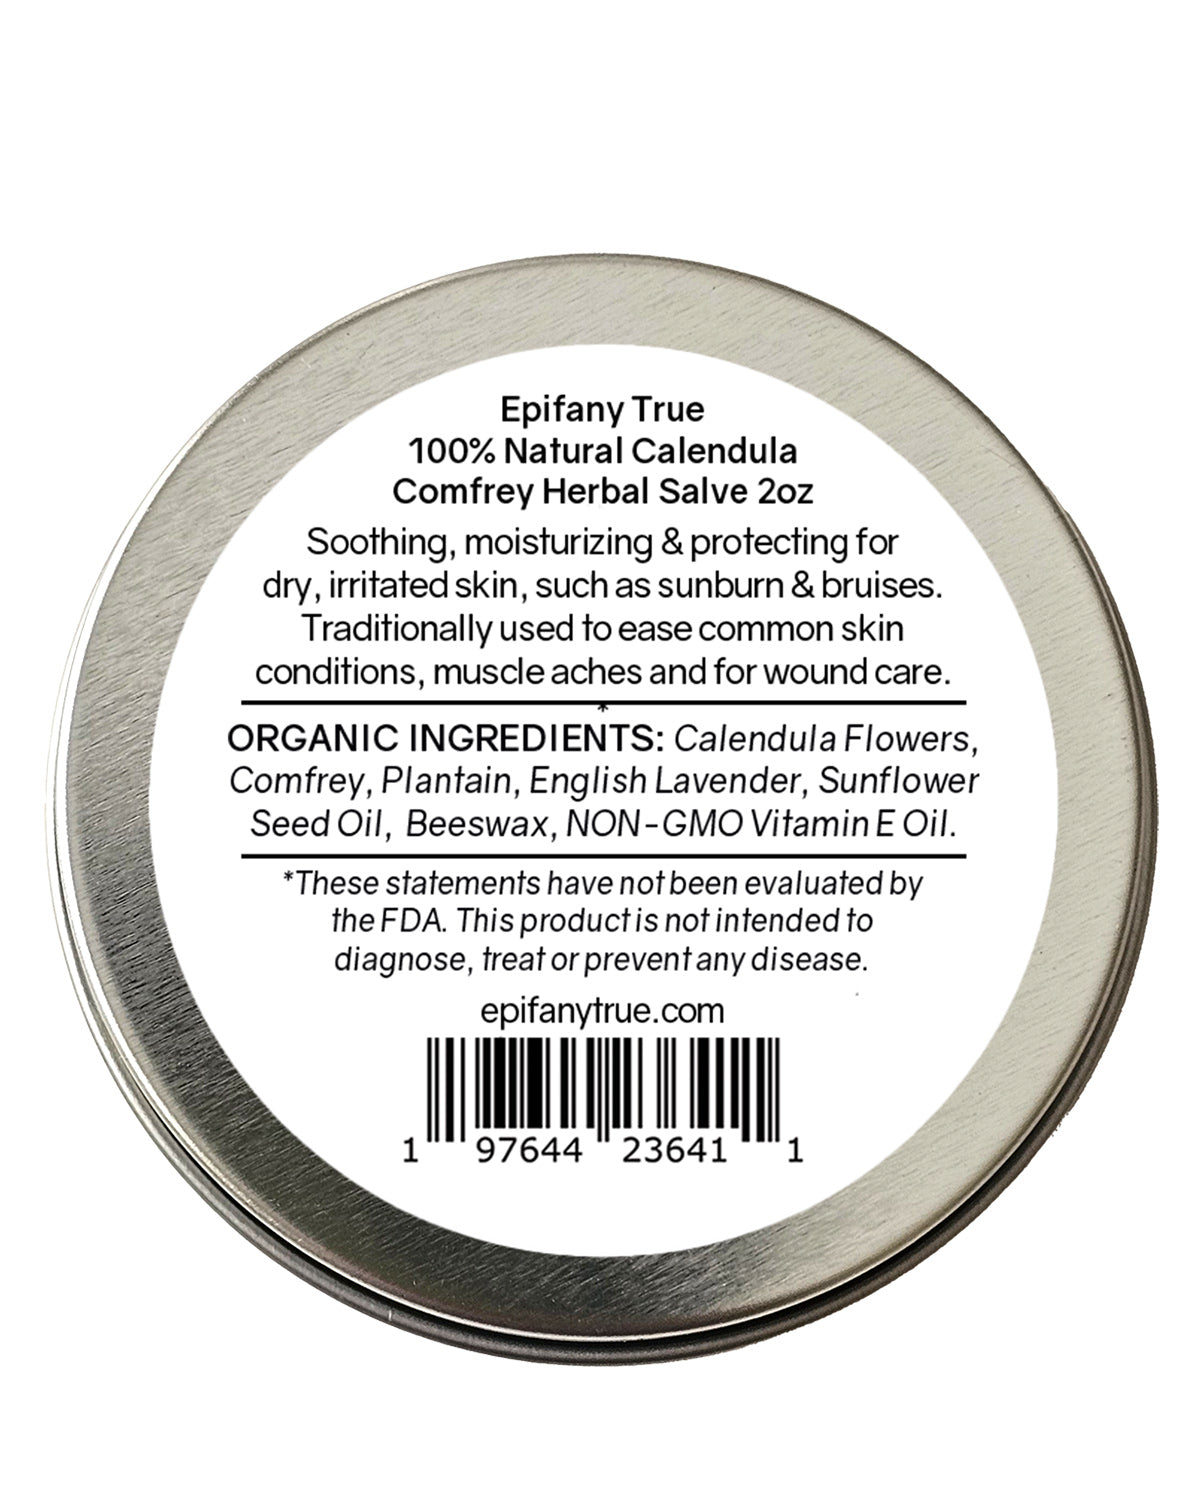 Epifany True Calendula Comfrey Herbal Salve 2oz Fragrance-Free. Back of product